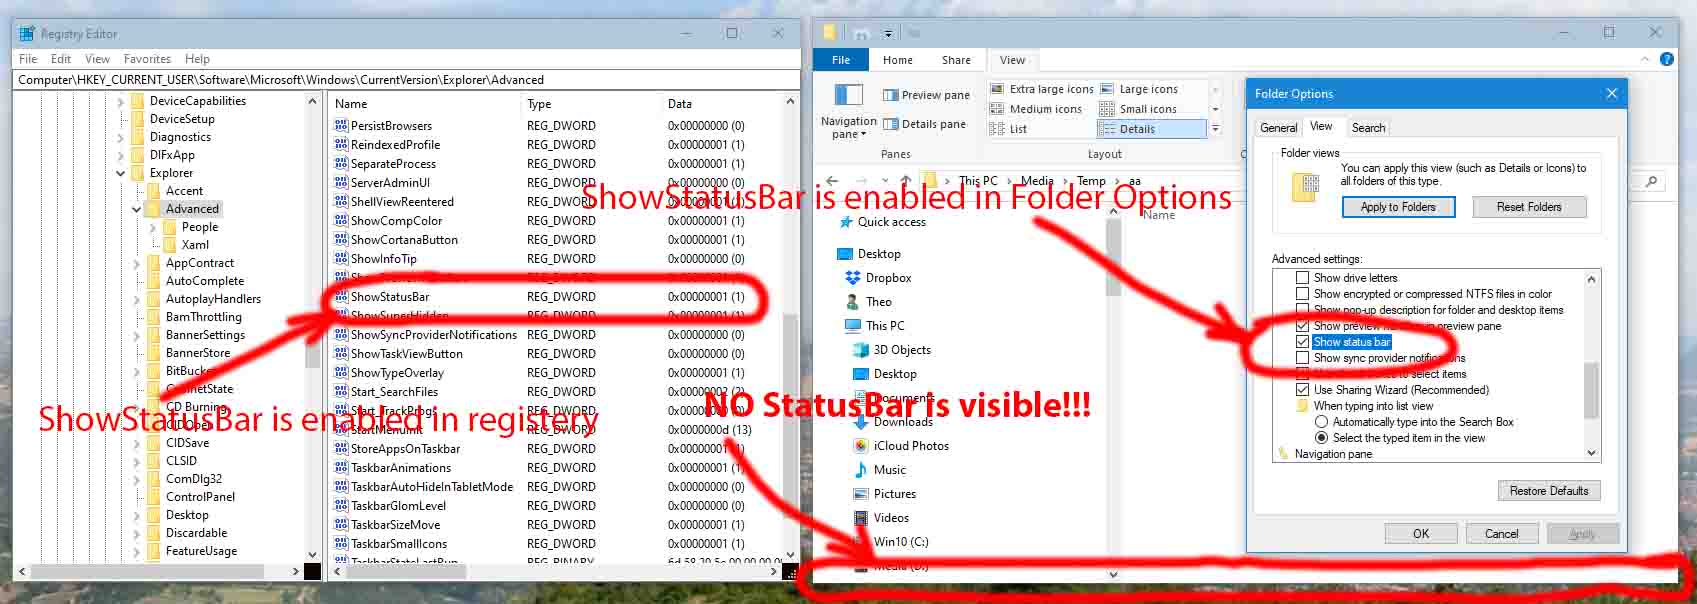 No StatusBar in Windows Explorer 7286c024-1701-4fbd-8fe8-0856d2a799d2?upload=true.jpg